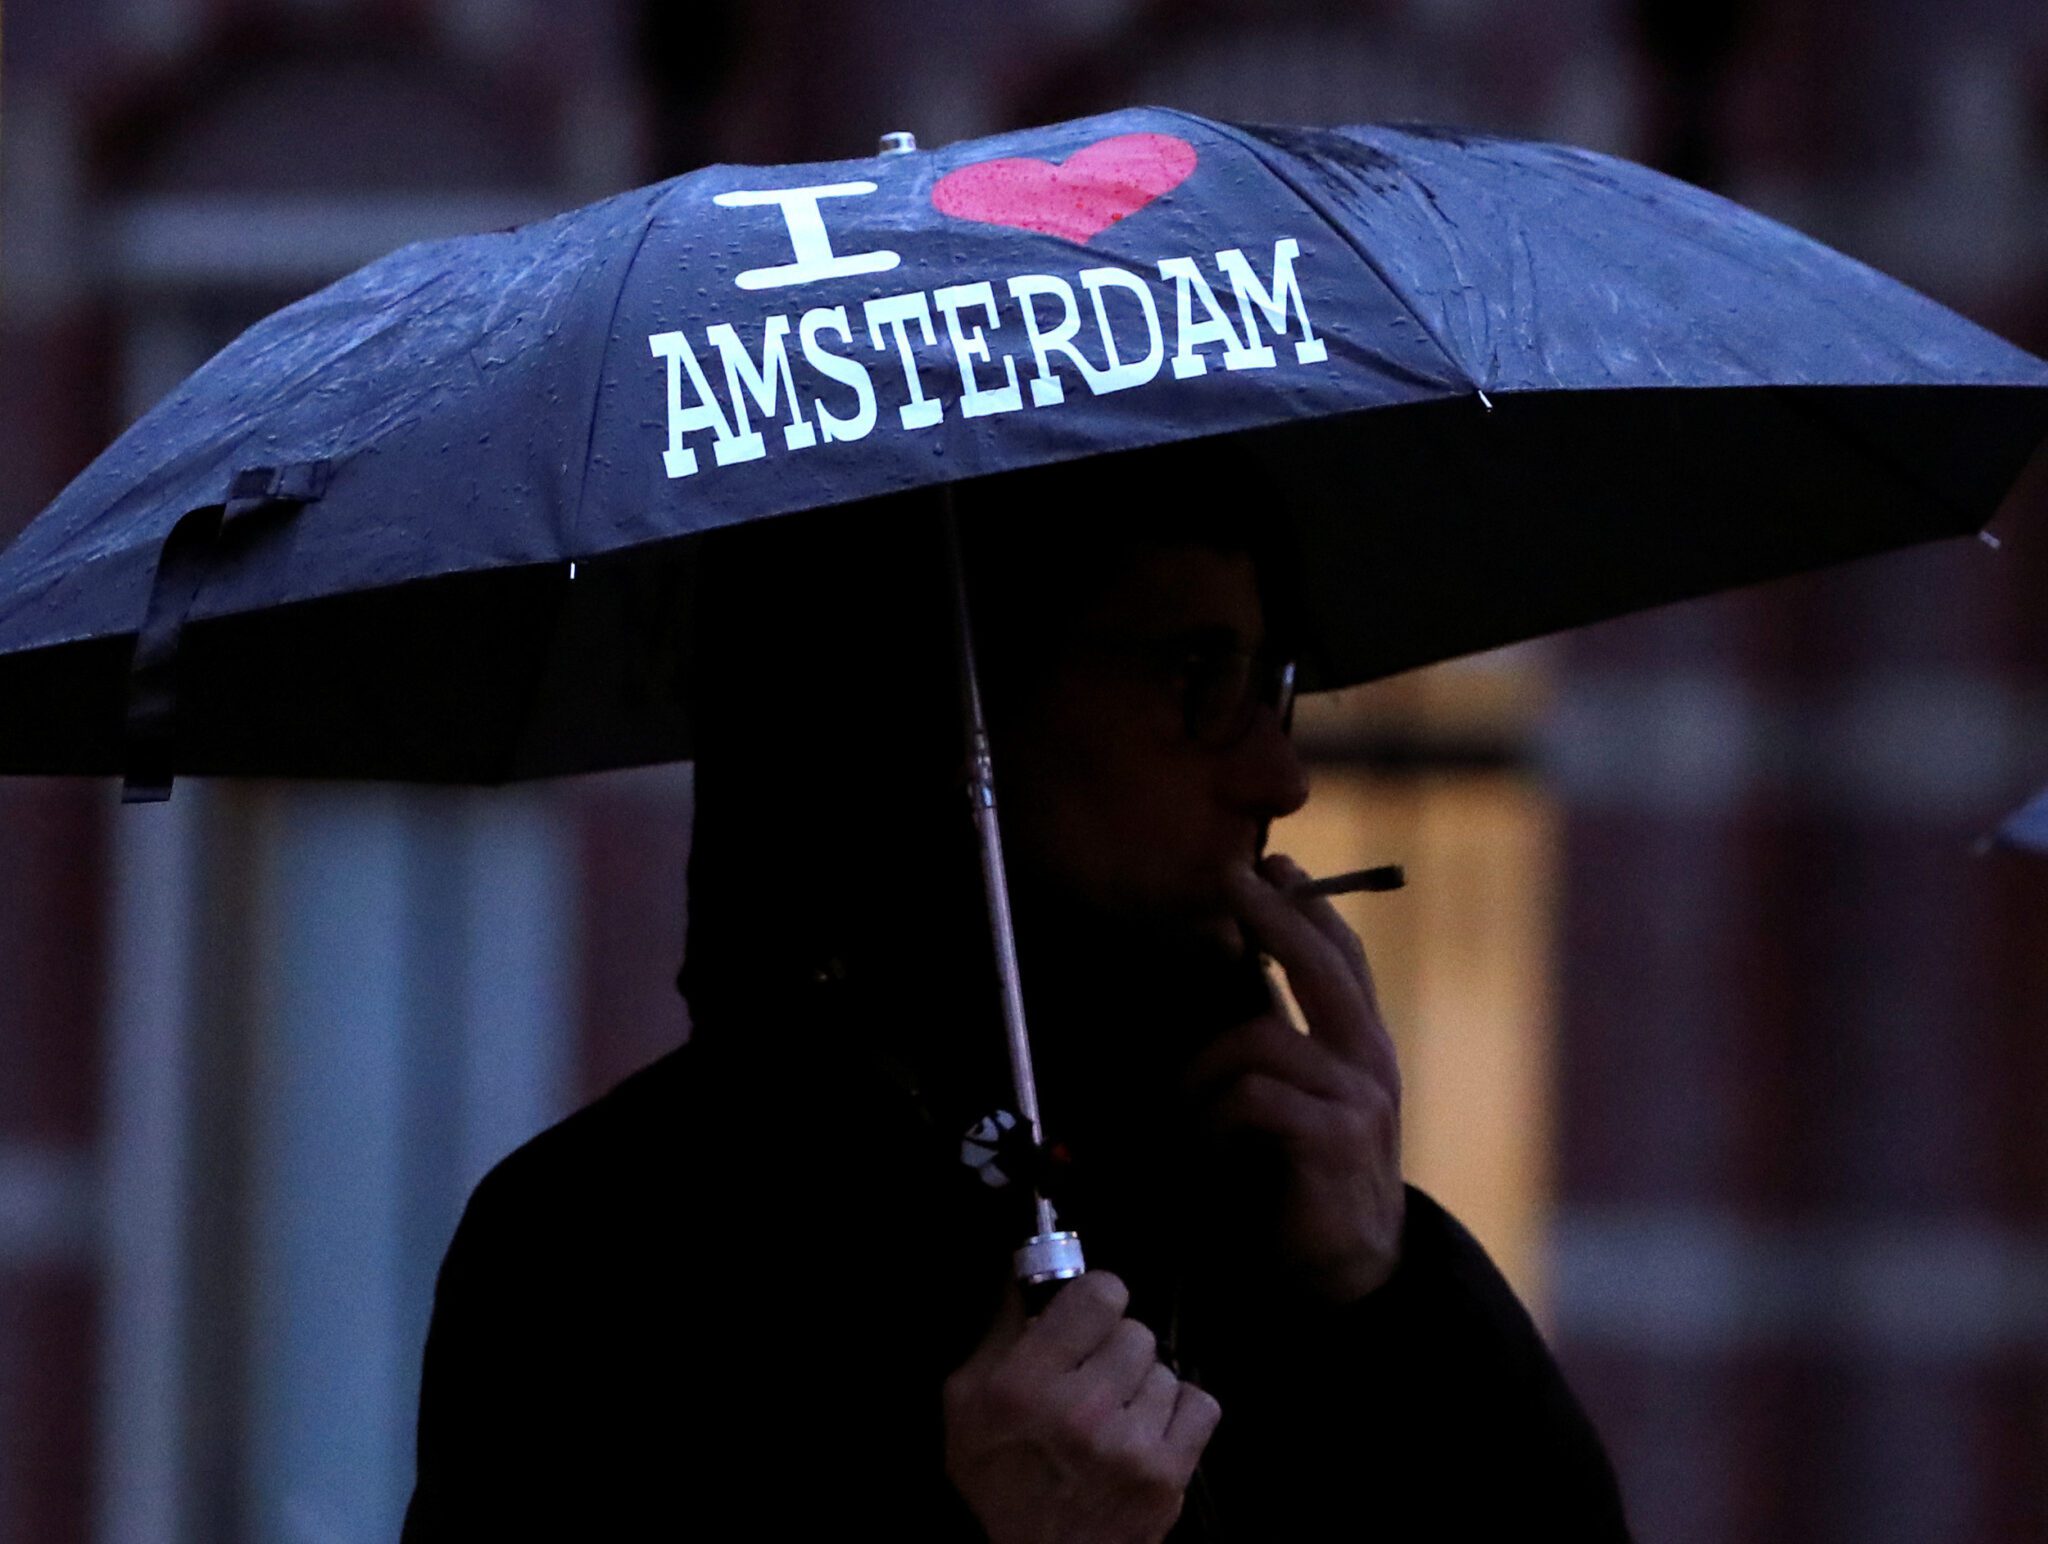 Man smoking in the Amsterdam rain. 